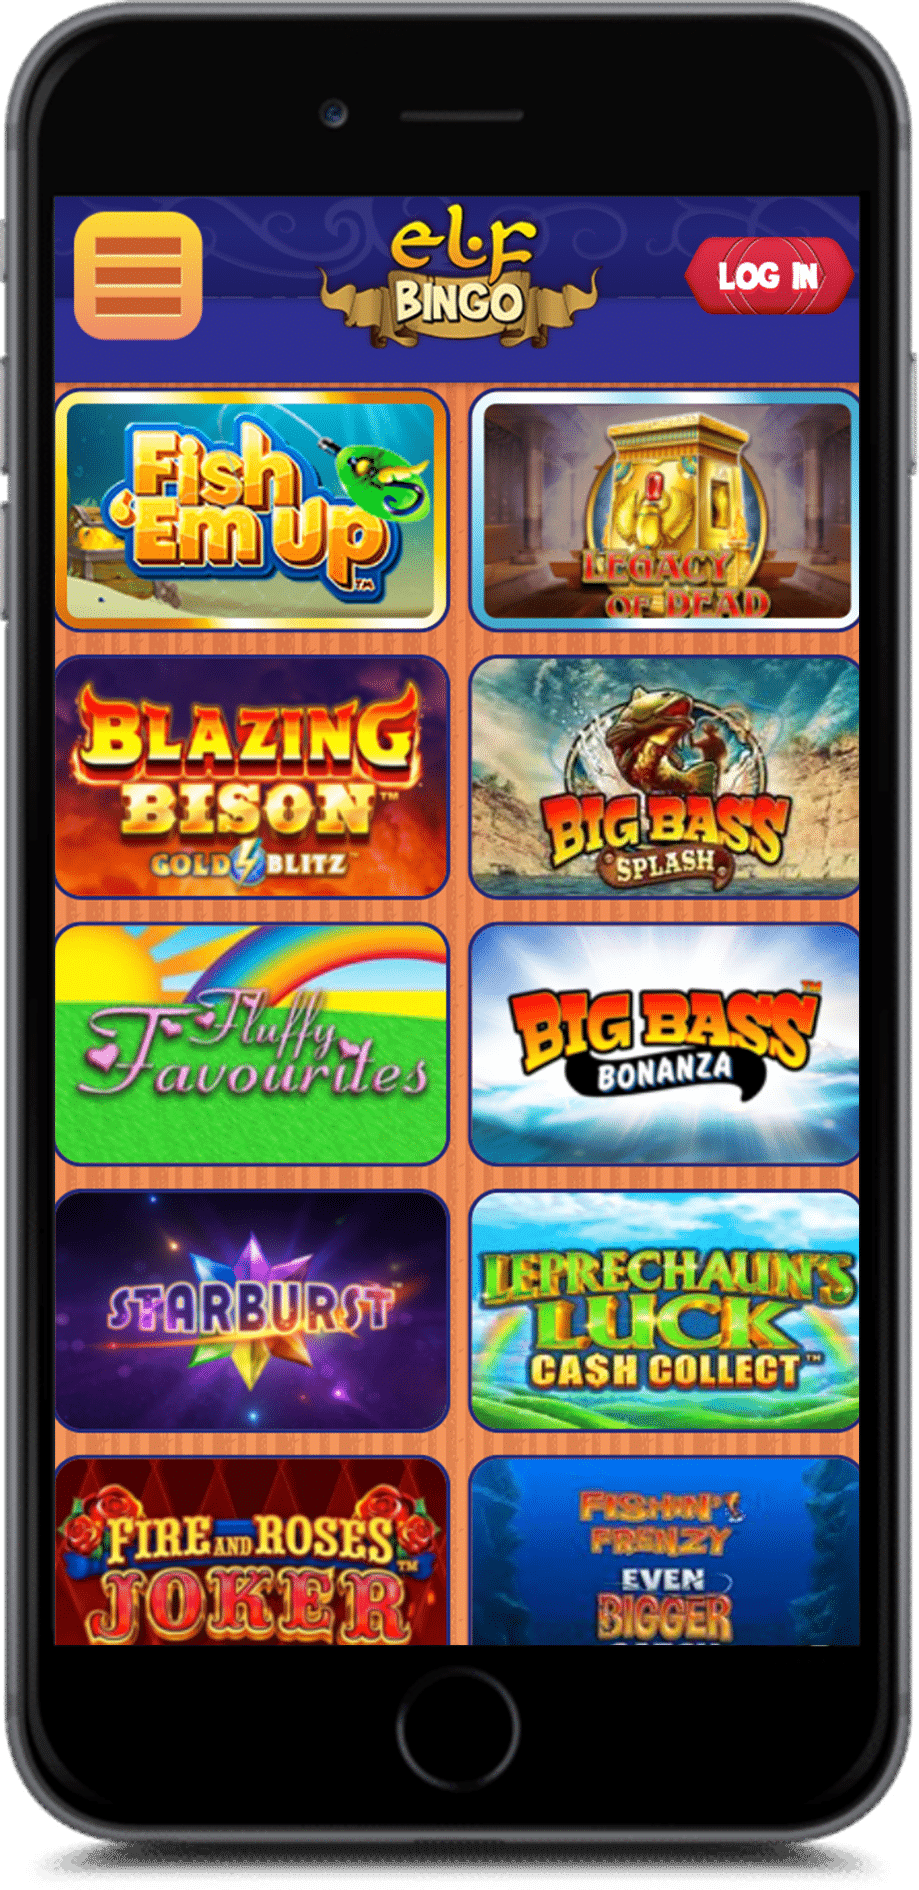 elf bingo casino bonus